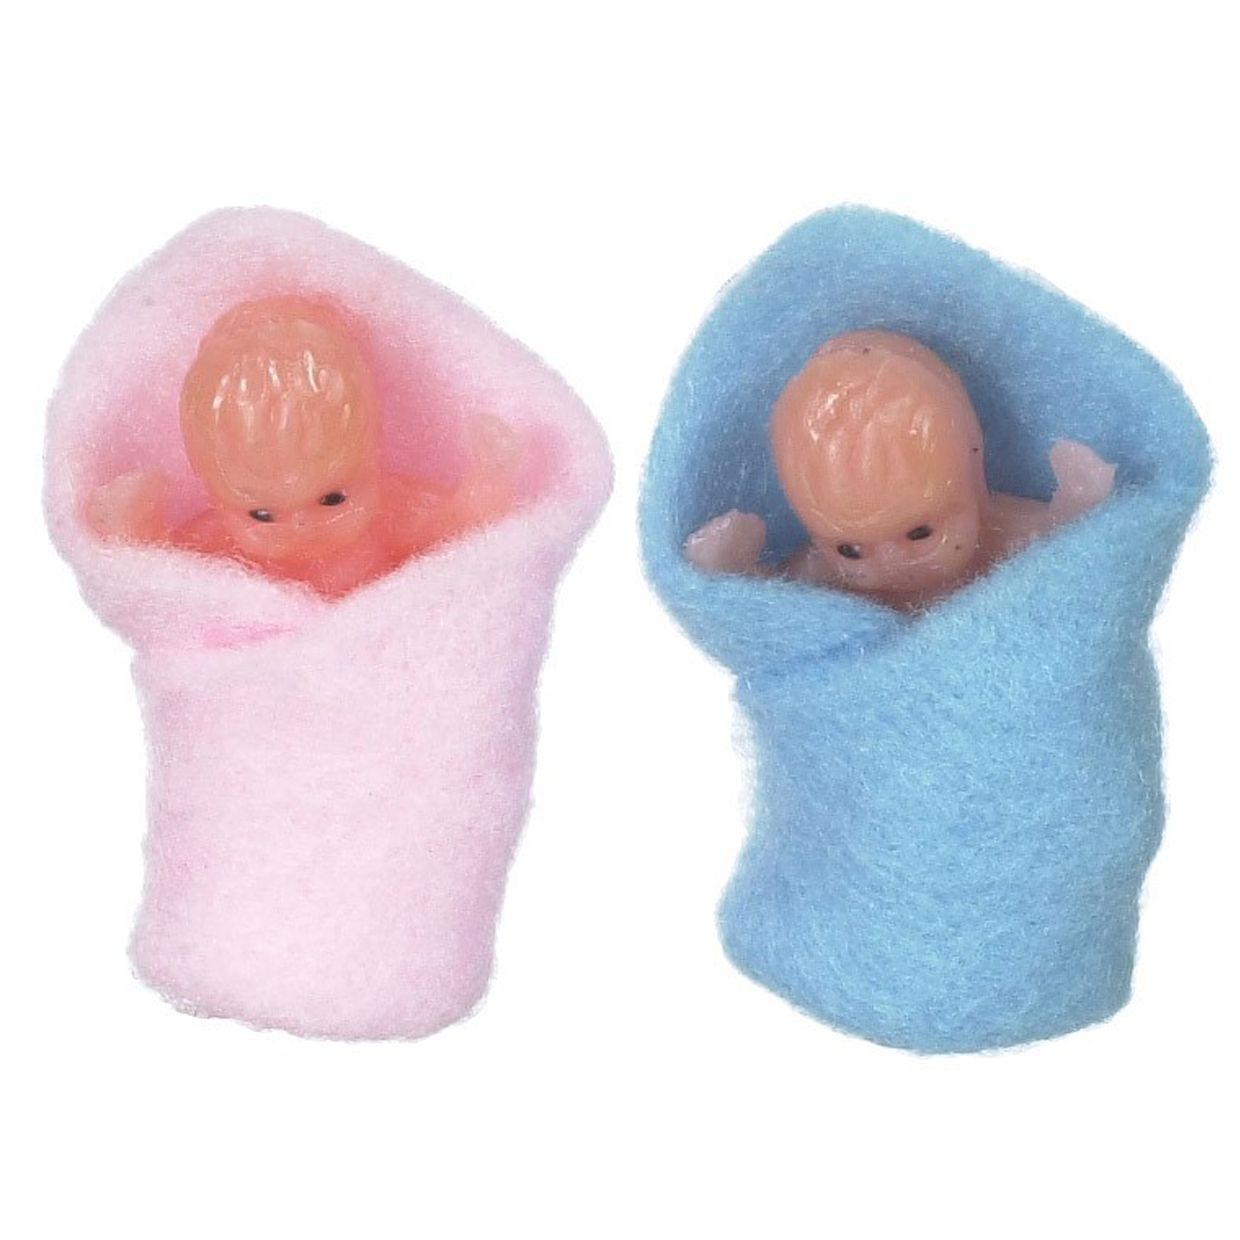 1 Inch Scale Babies in Blanket Dollhouse Miniature